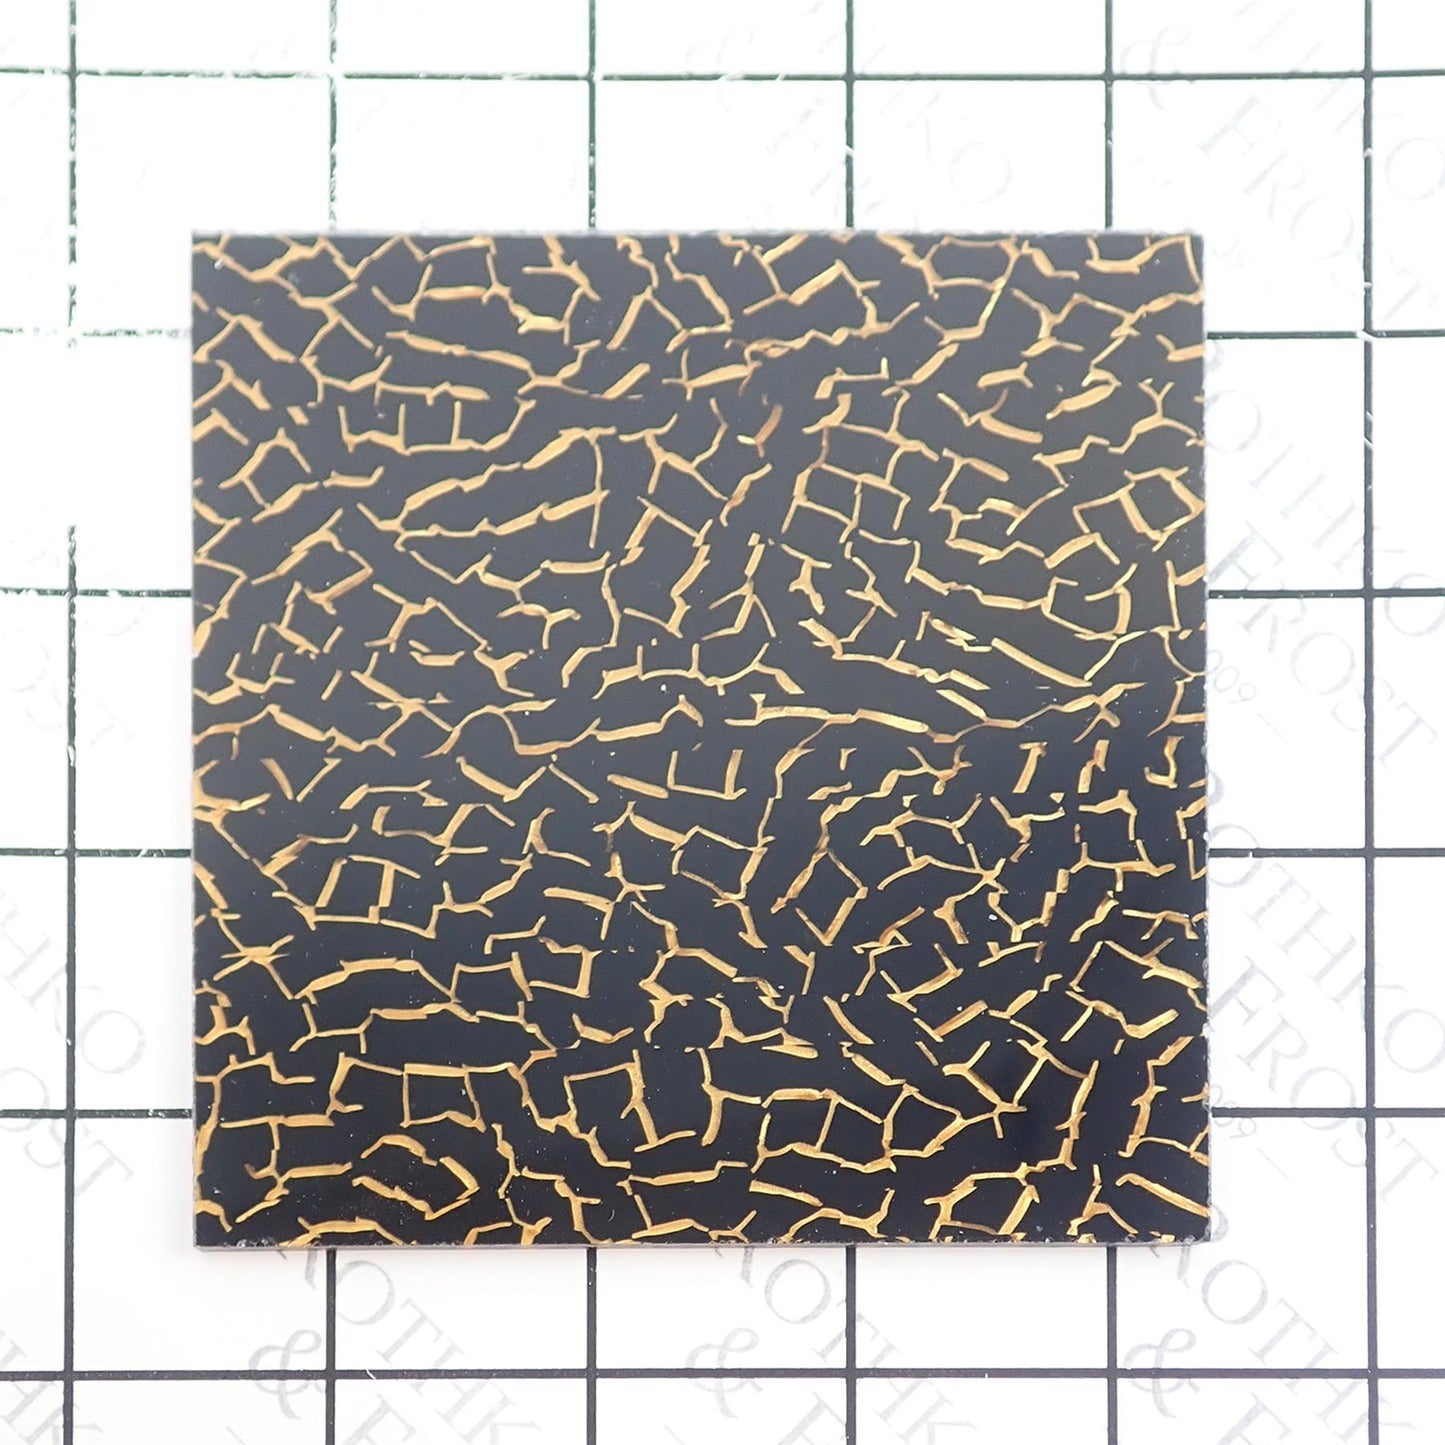 Incudo Black Crackle Celluloid Laminate Acrylic Sheet - 300x200x3mm (11.8x7.87x0.12")